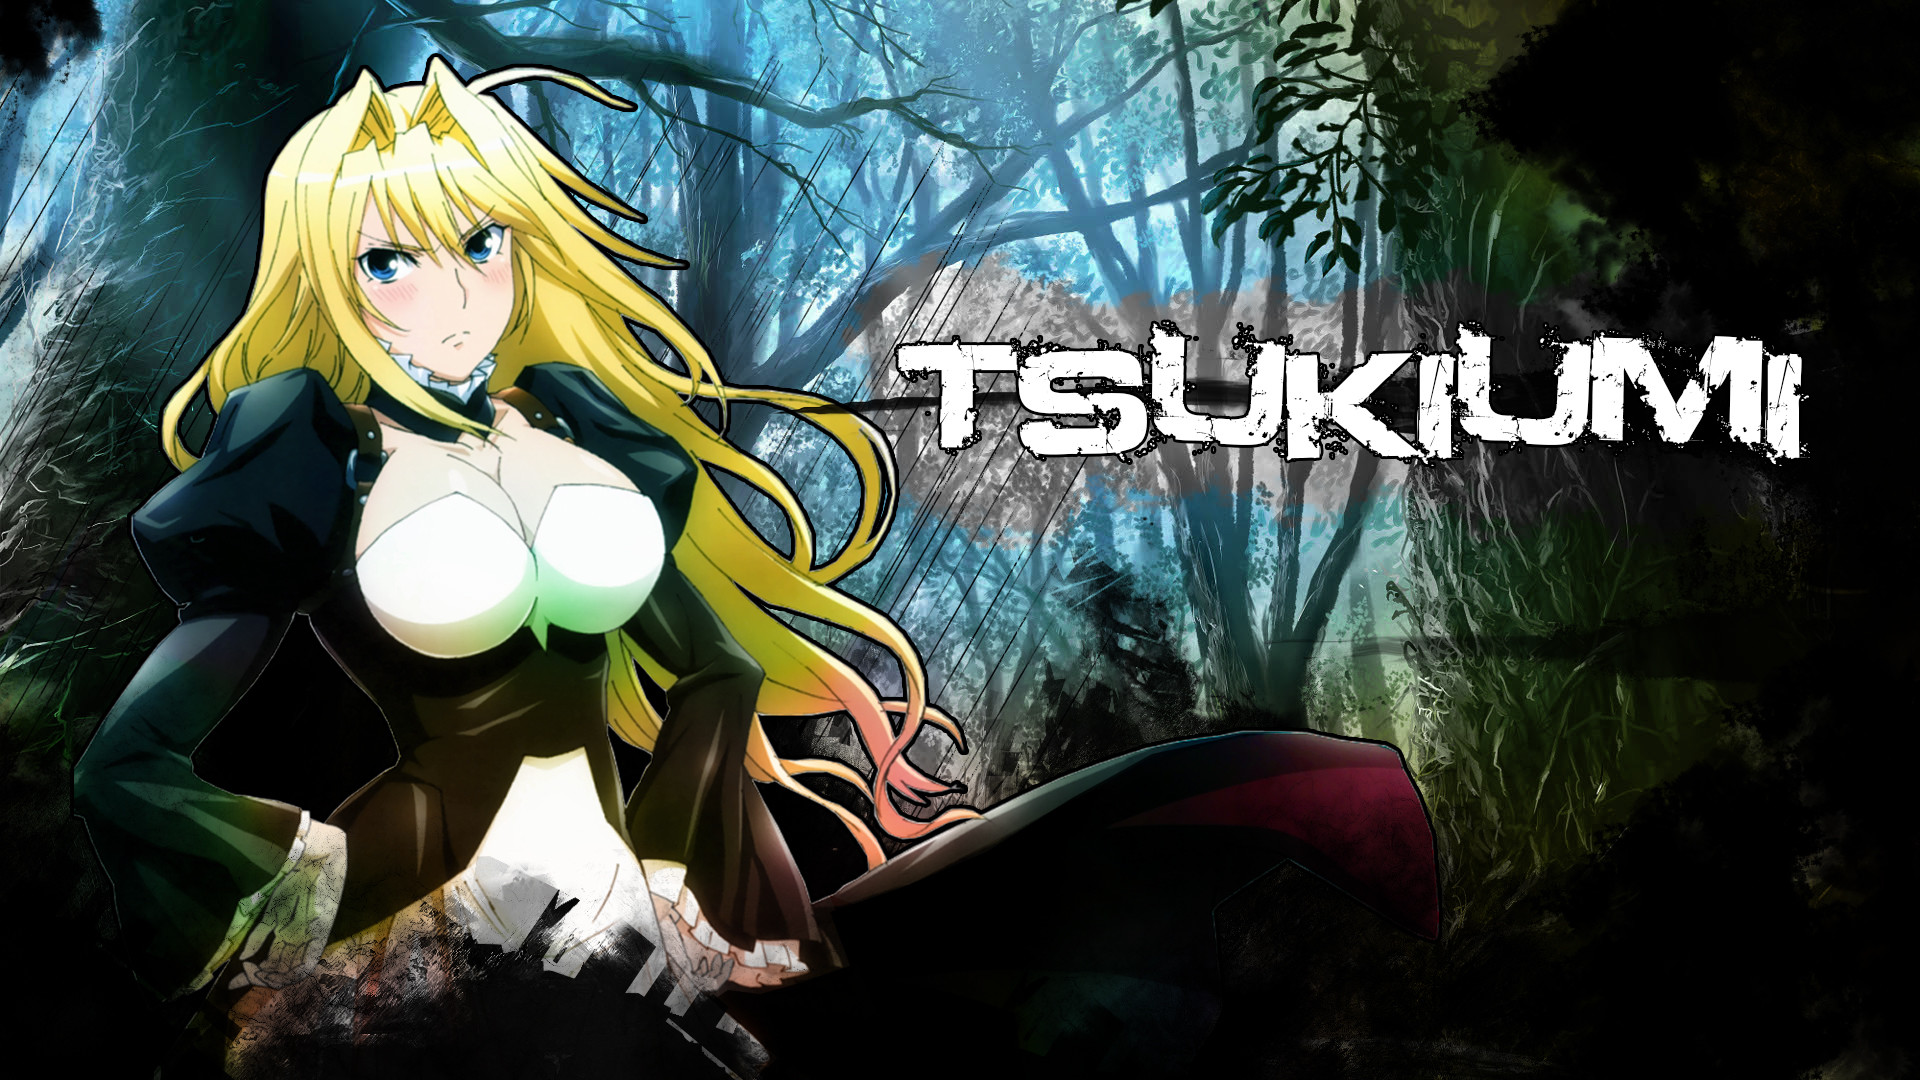 1920x1080 Anime - Sekirei Tsukiumi (Sekirei) Anime Girl Tree Forest Manga Samurai  Ninja Beautiful Abstract